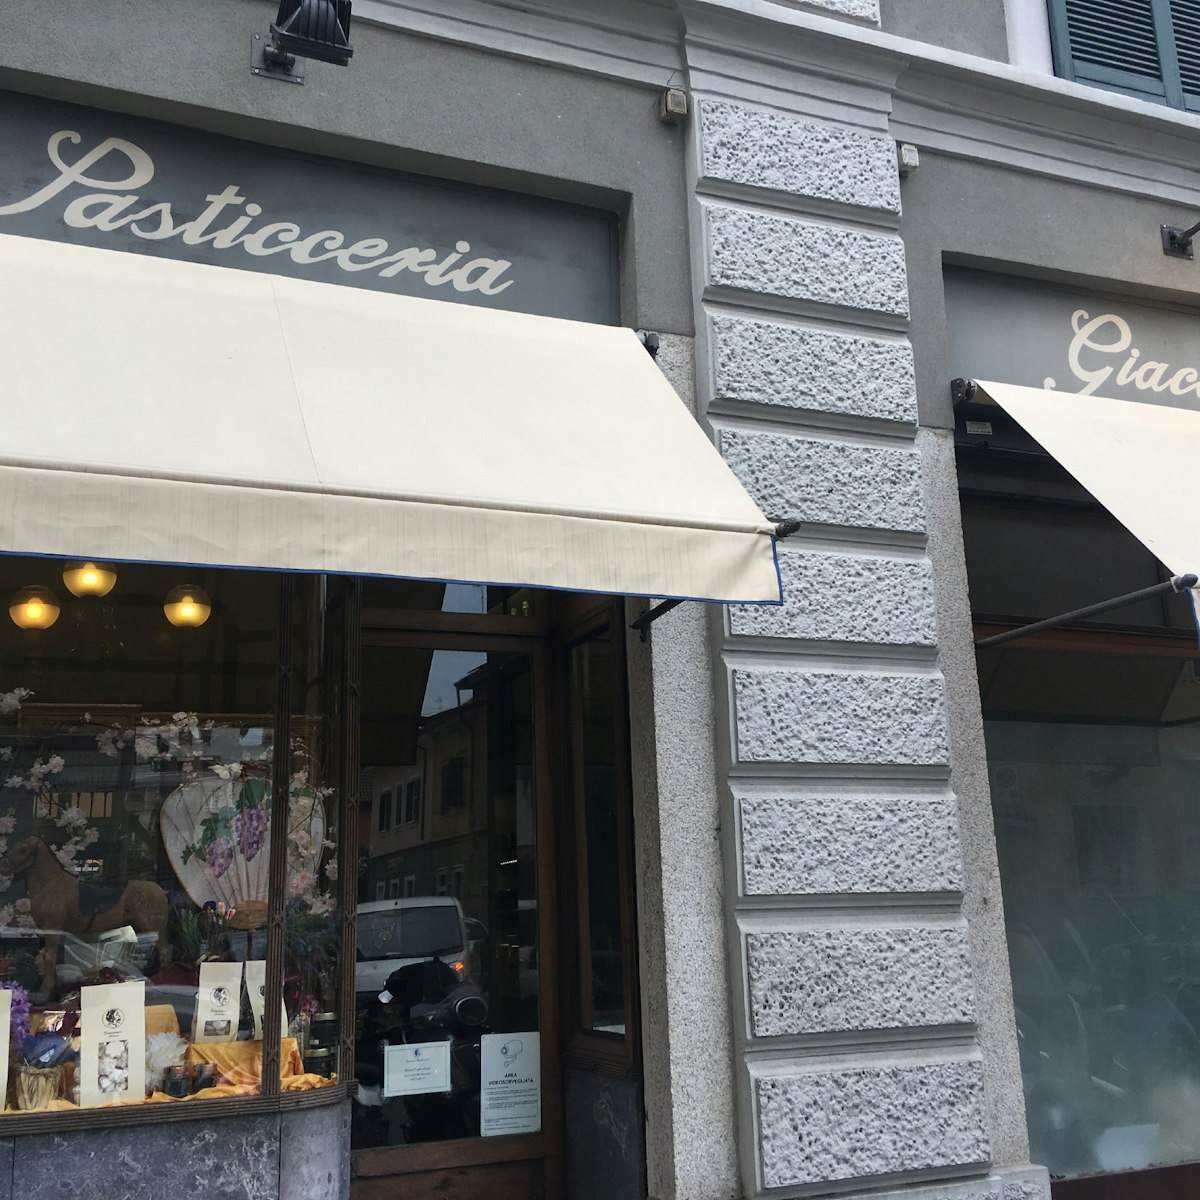 The Pasticceria Giacomo shop front